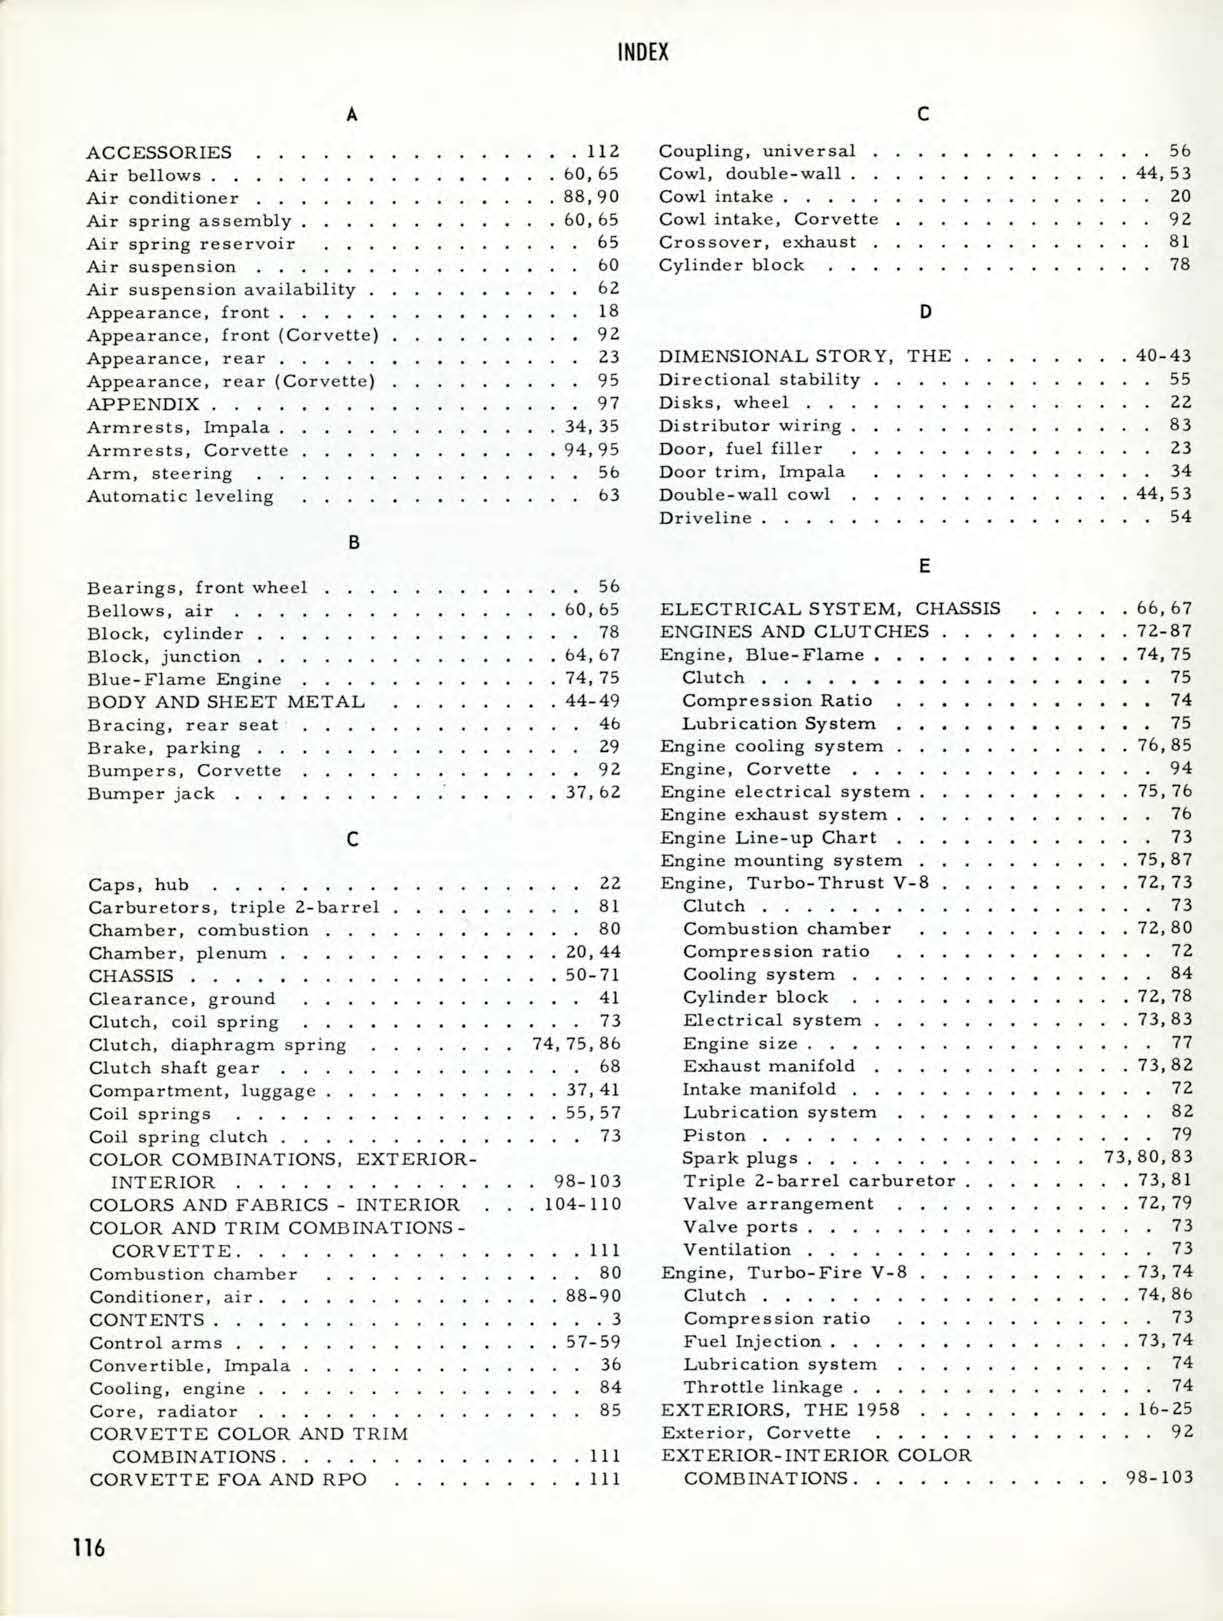 1958_Chevrolet_Engineering_Features-116